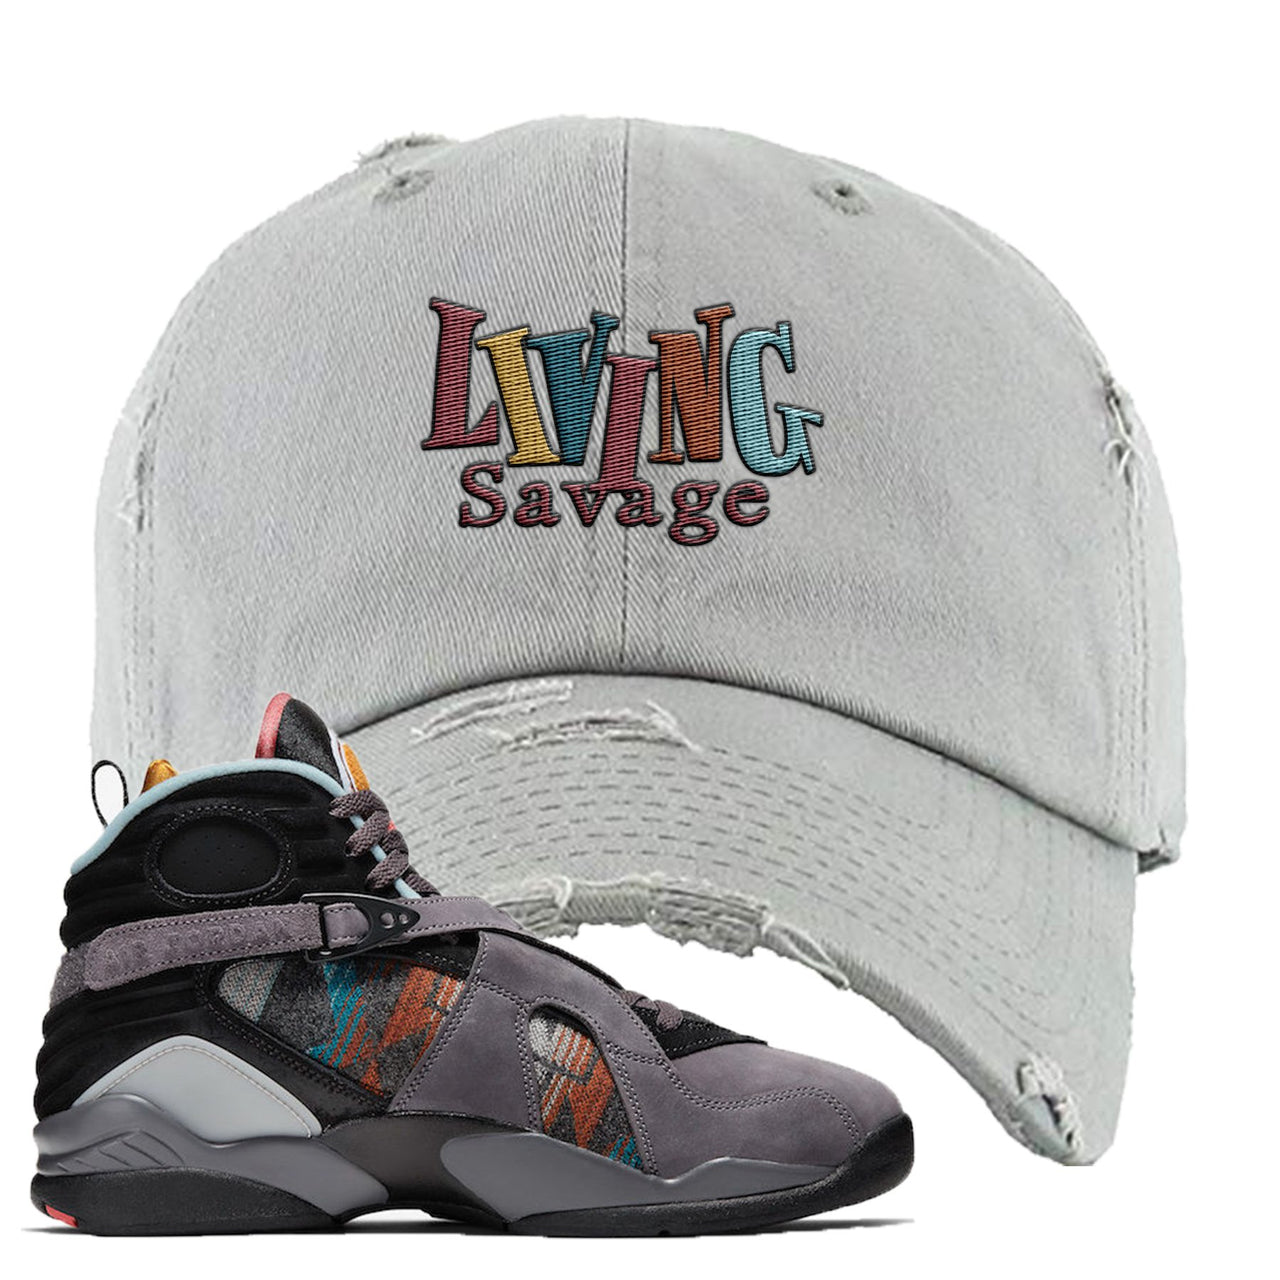 Jordan 8 N7 Pendleton Living Savage Light Gray Sneaker Hook Up Distressed Dad Hat